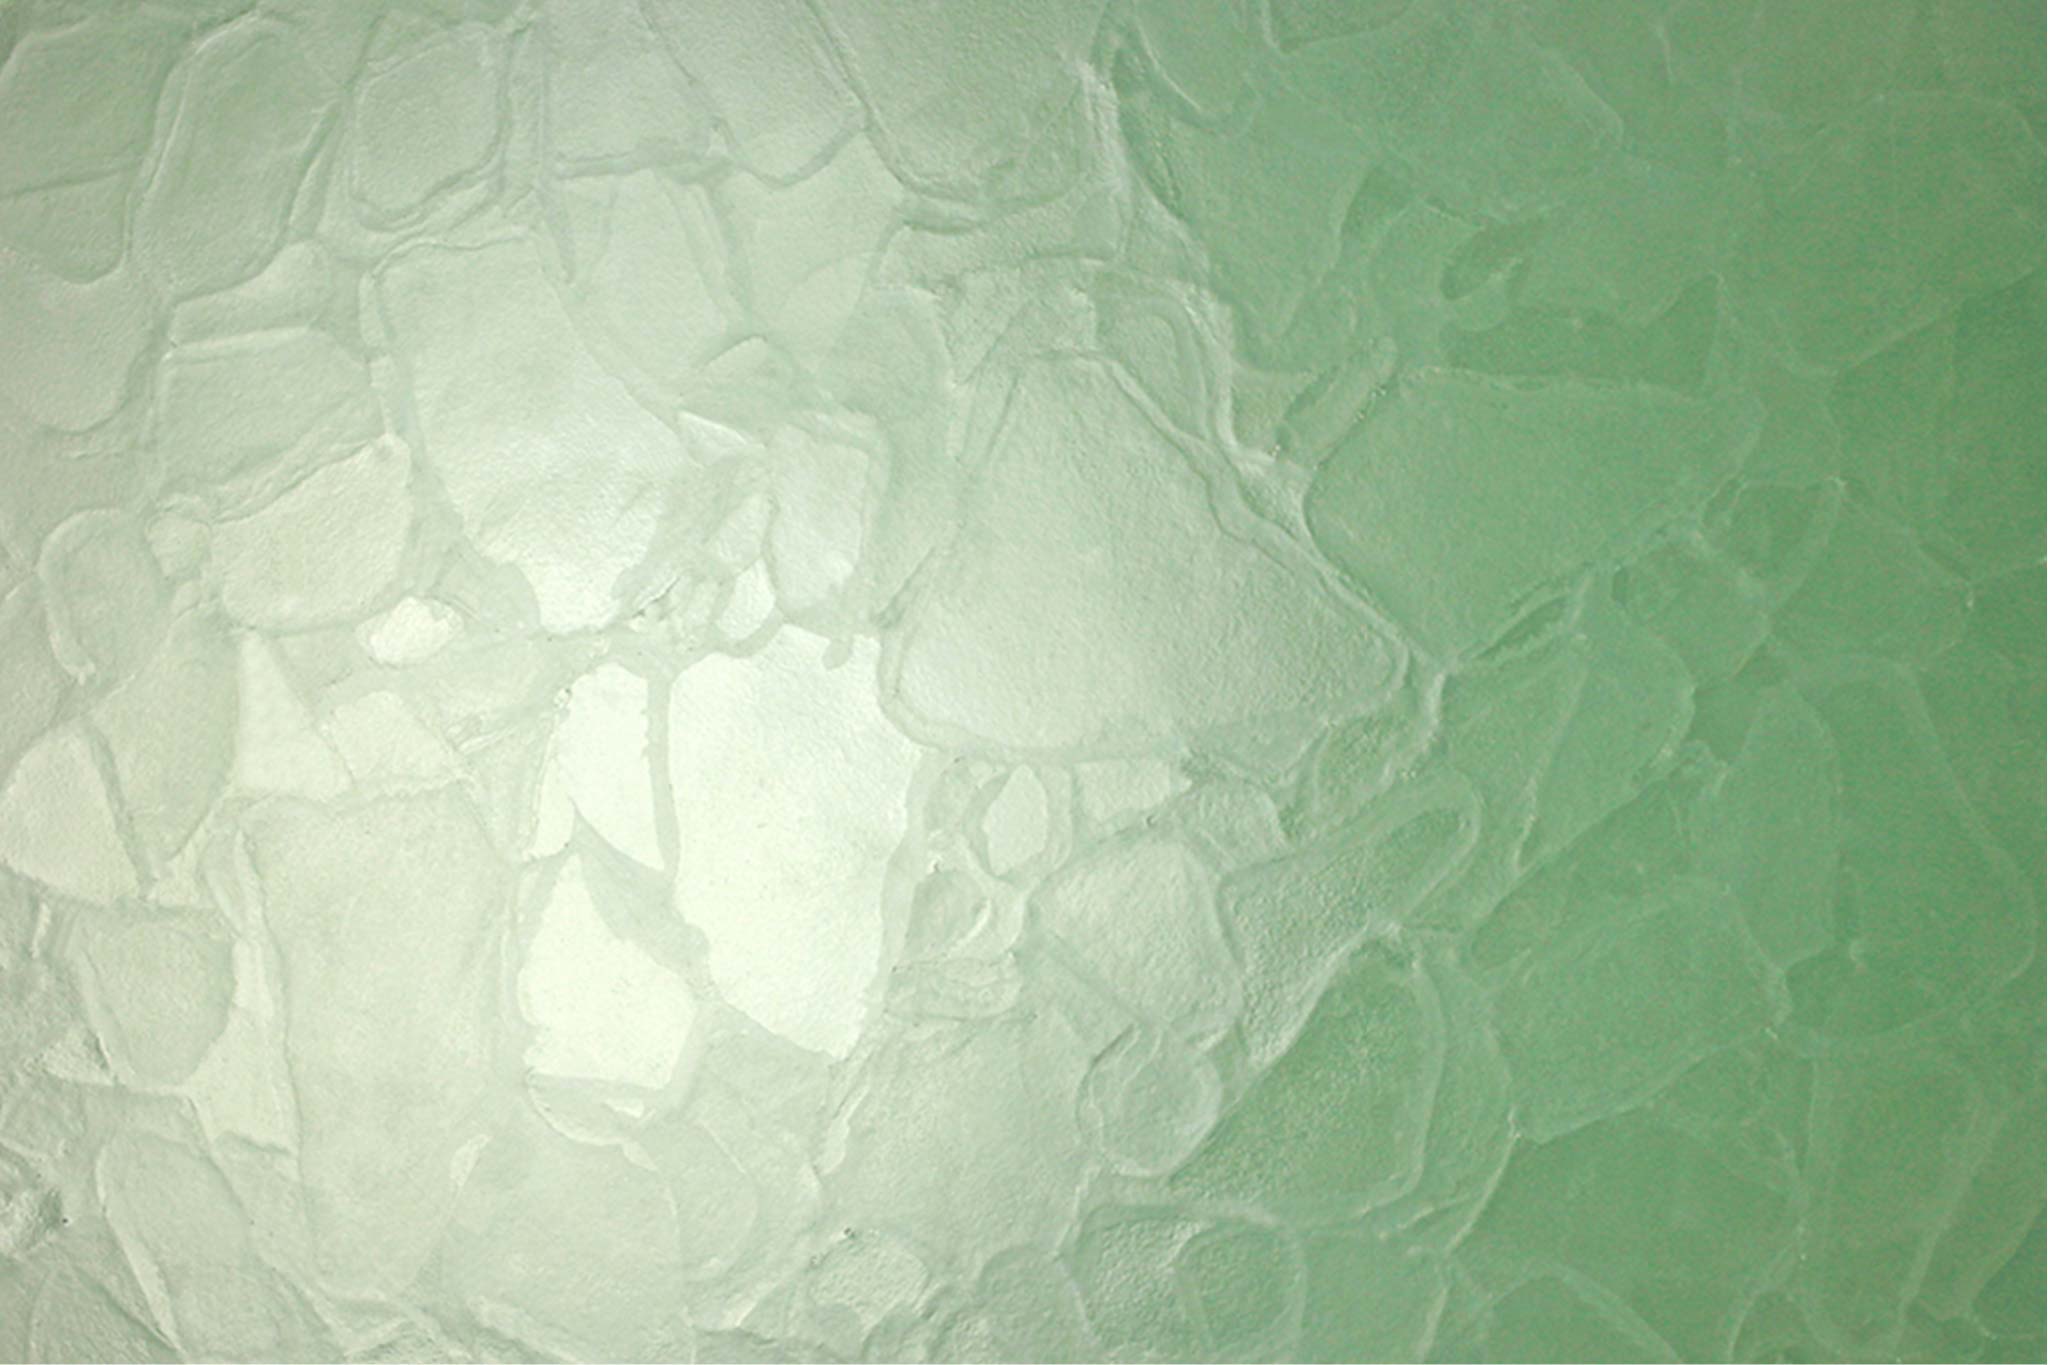 Bio-Glass Oriental Jade - Correct.jpg